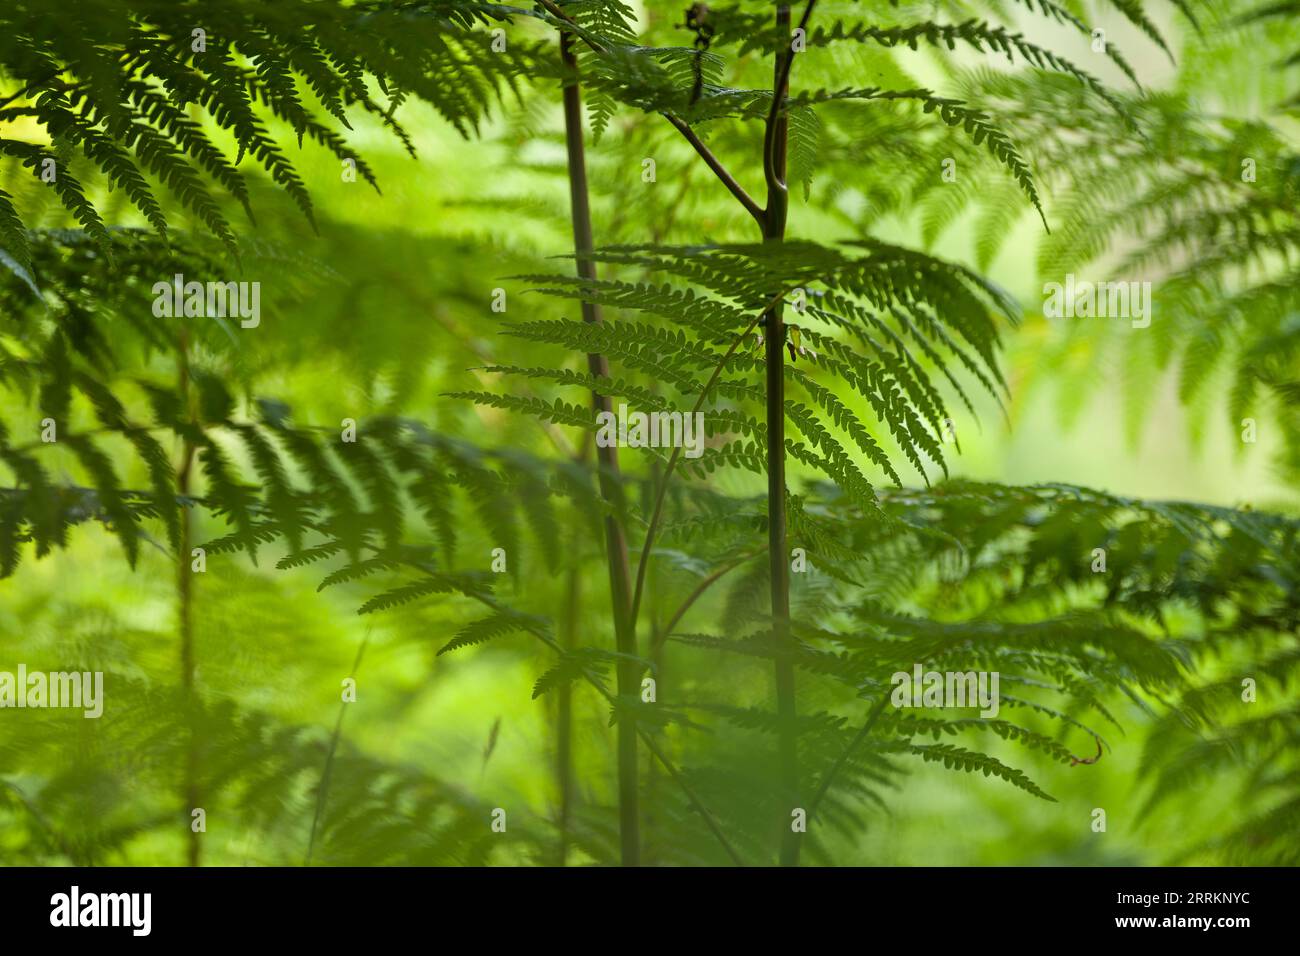 Eagle fern (Pteridium aquilinum), forest of fern plants from frog perspective, Pfälzerwald Nature Park, Pfälzerwald-Nordvogesen Biosphere Reserve, Germany, Rhineland-Palatinate Stock Photo